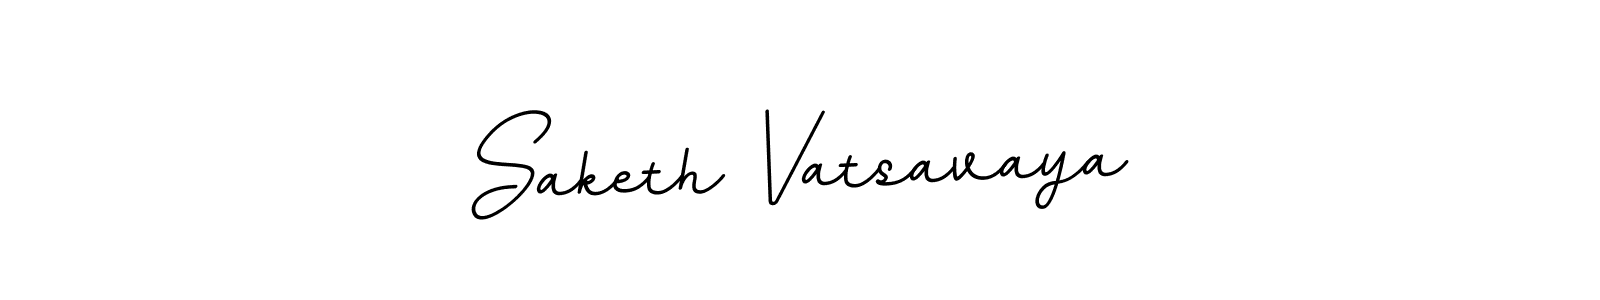 How to make Saketh Vatsavaya signature? BallpointsItalic-DORy9 is a professional autograph style. Create handwritten signature for Saketh Vatsavaya name. Saketh Vatsavaya signature style 11 images and pictures png